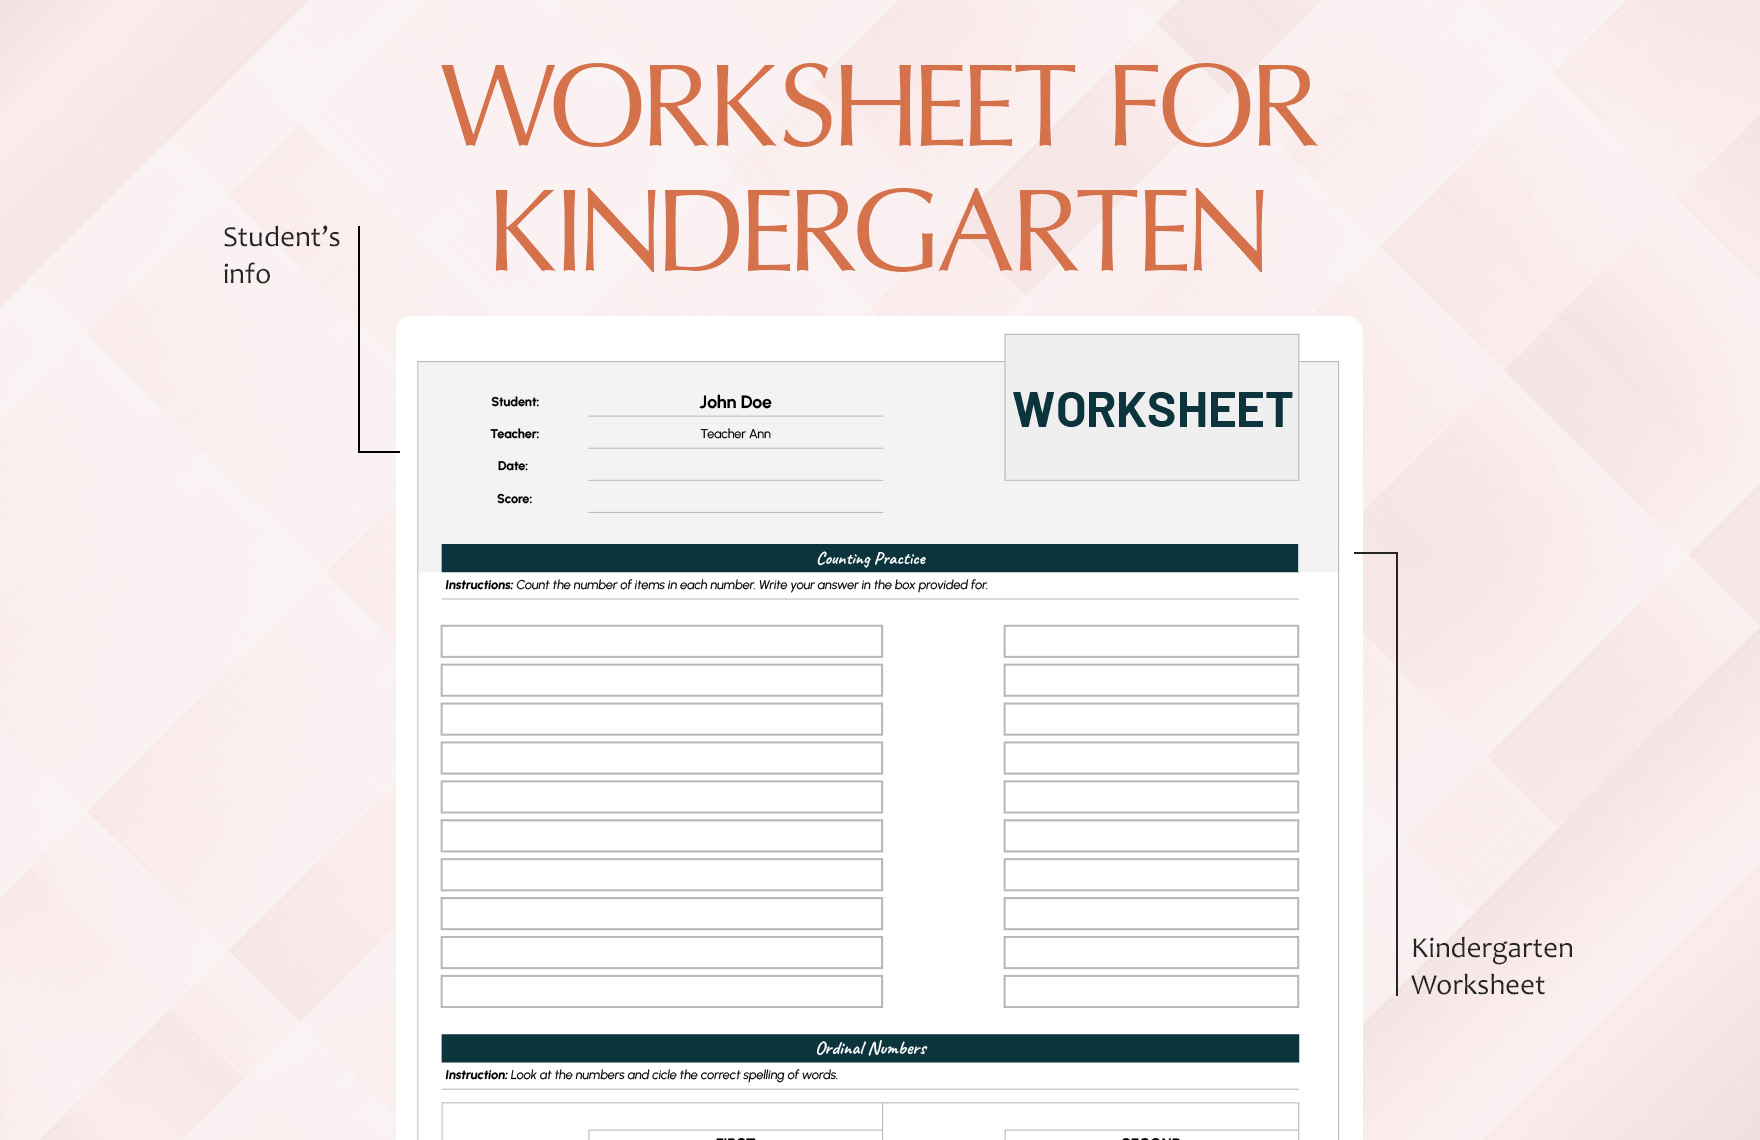 Worksheet For Kindergarten Template